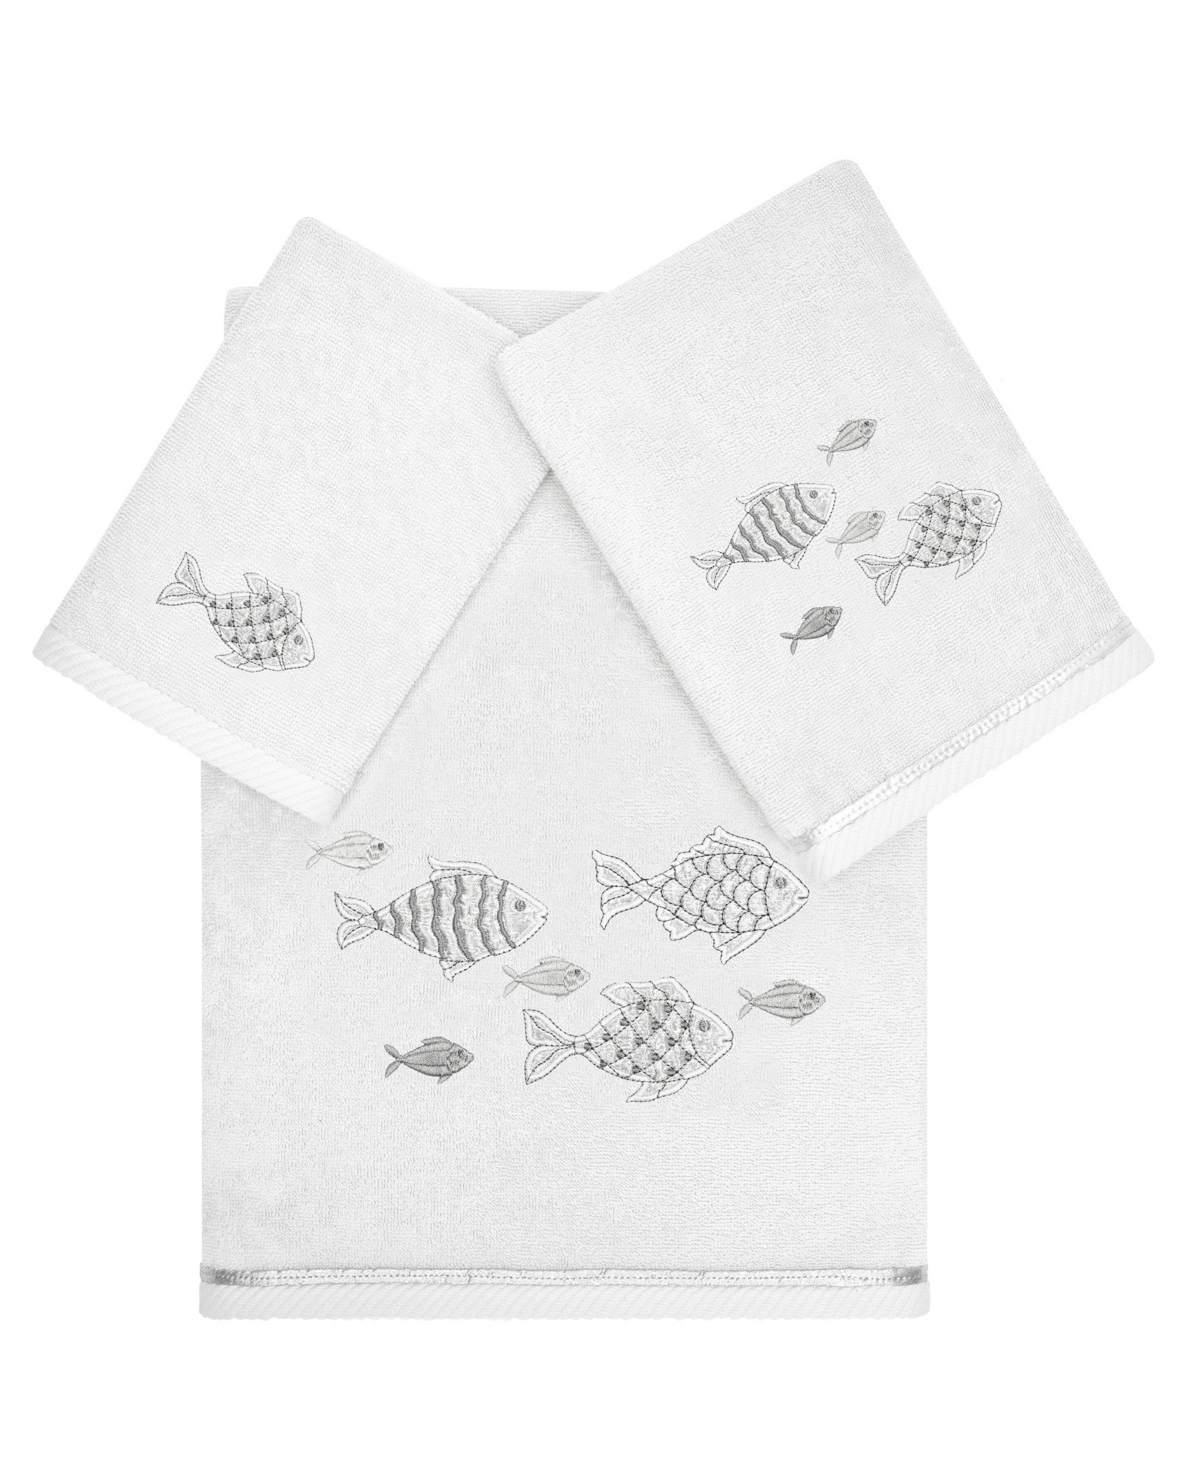 Linum Home Textiles Turkish Cotton Figi Embellished Towel Set, 3 Piece Bedding In Silver